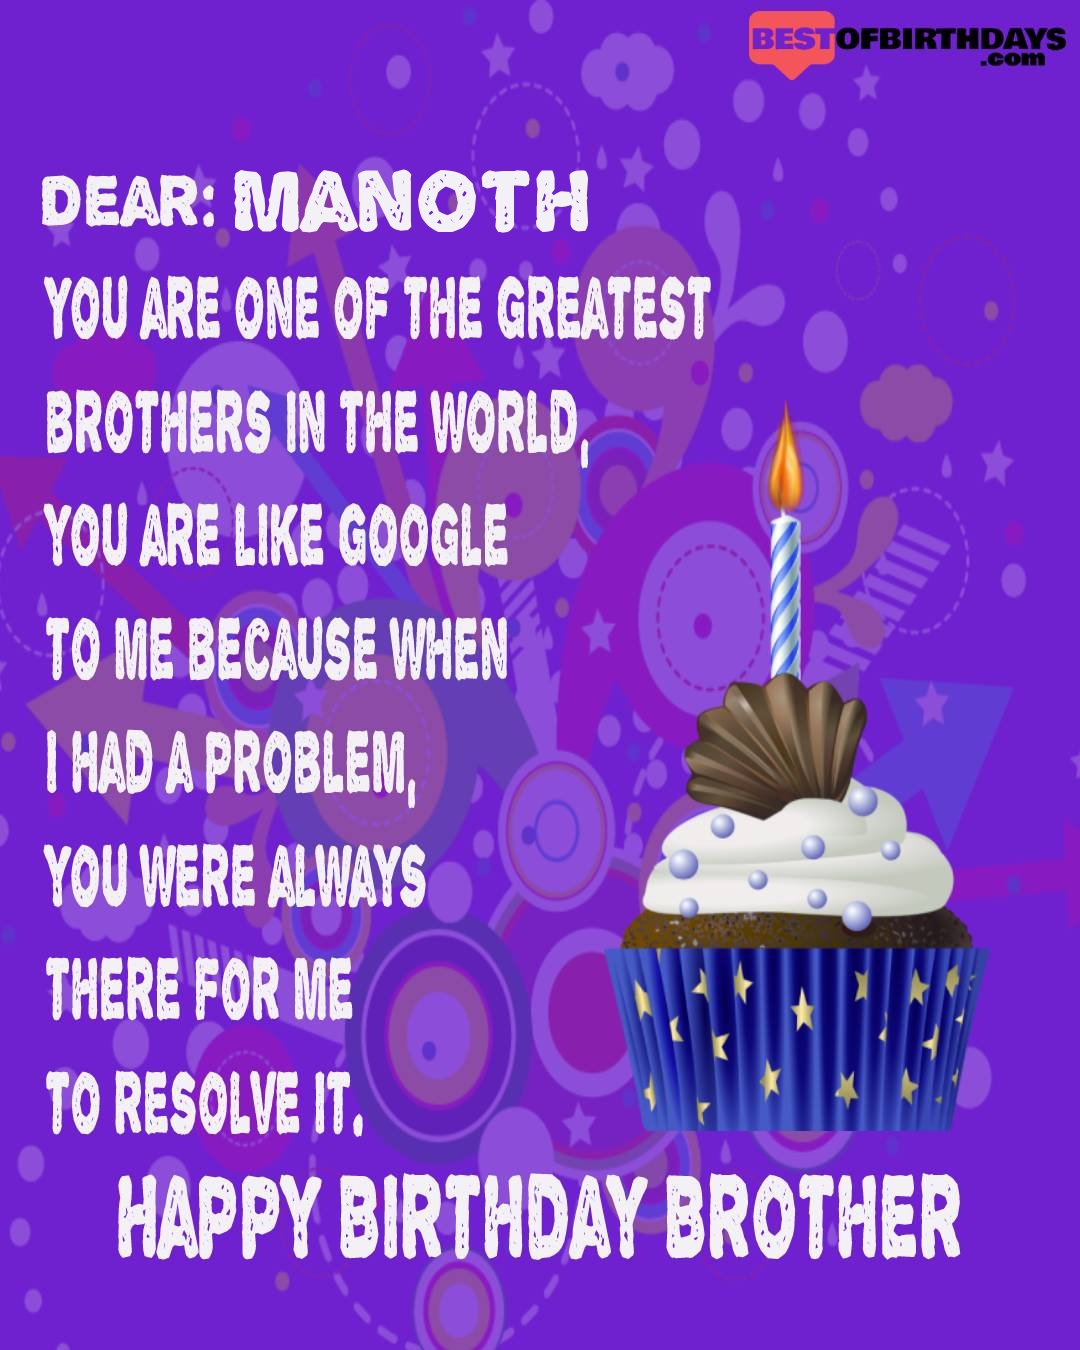 Happy birthday manoth bhai brother bro